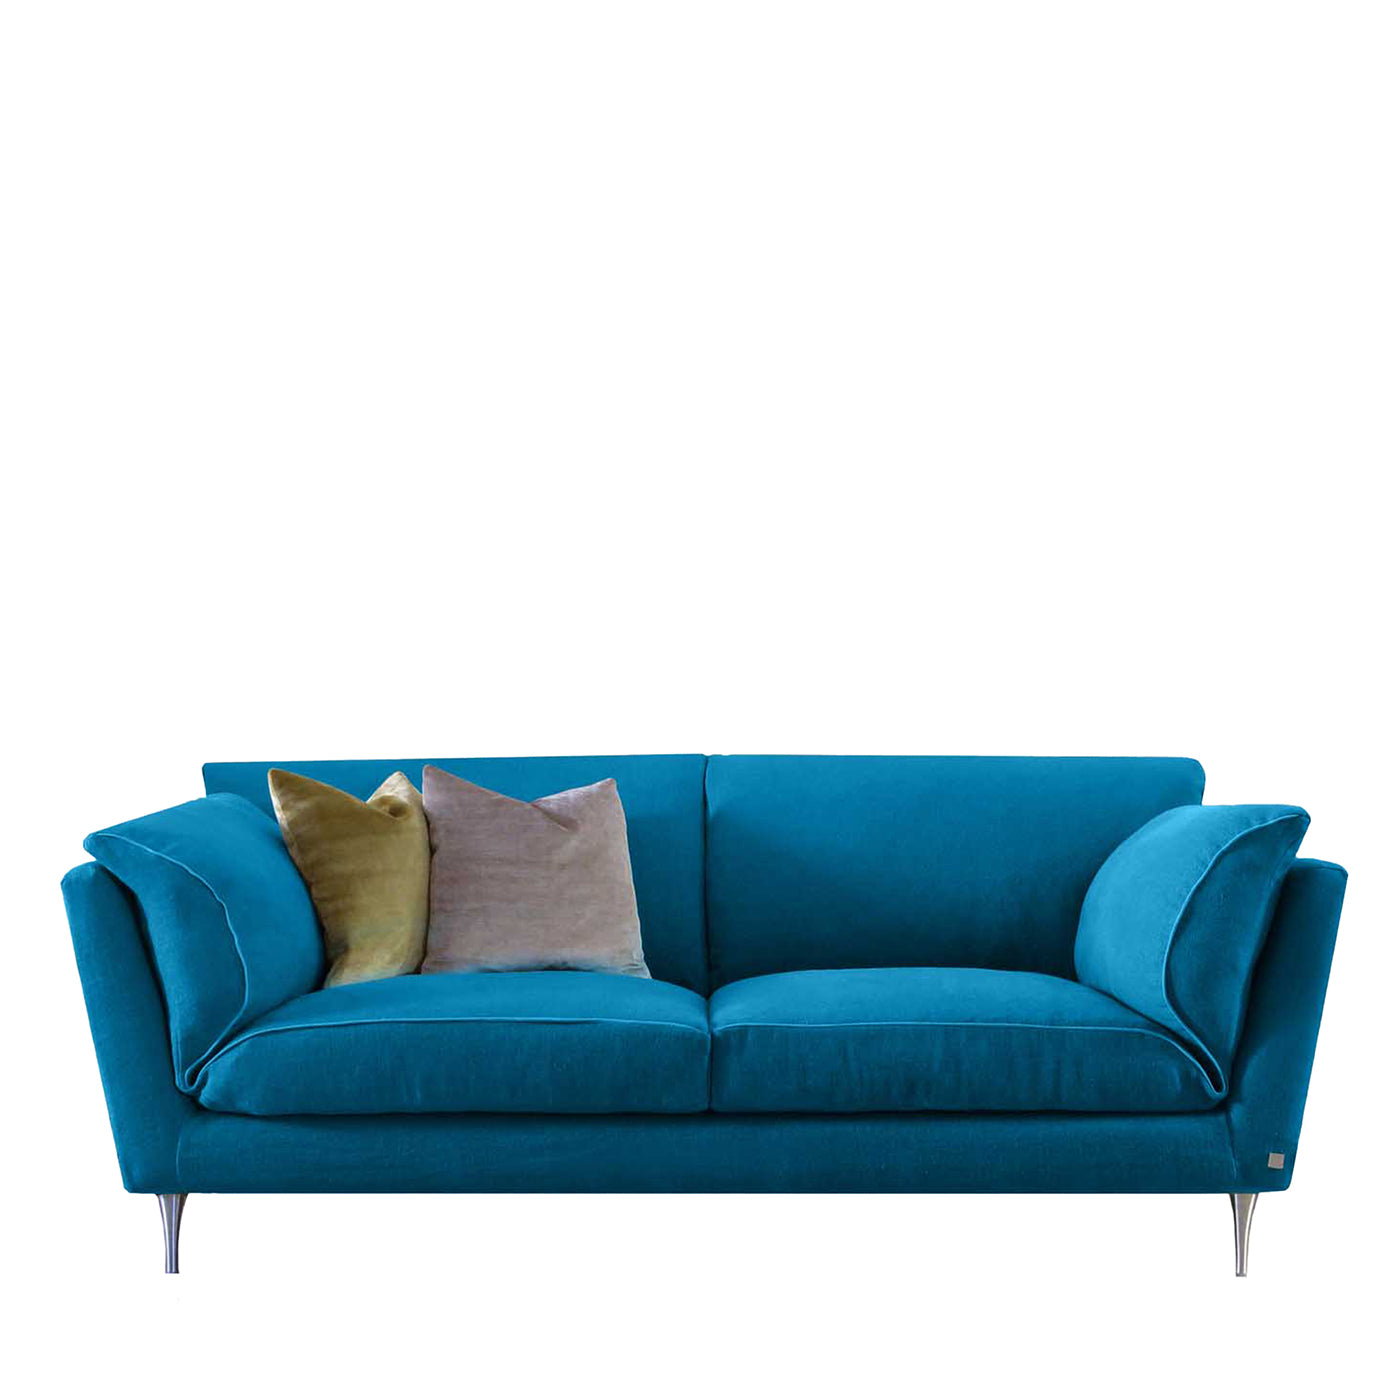 Casquet in Pfauenblau Sofa - Hauptansicht